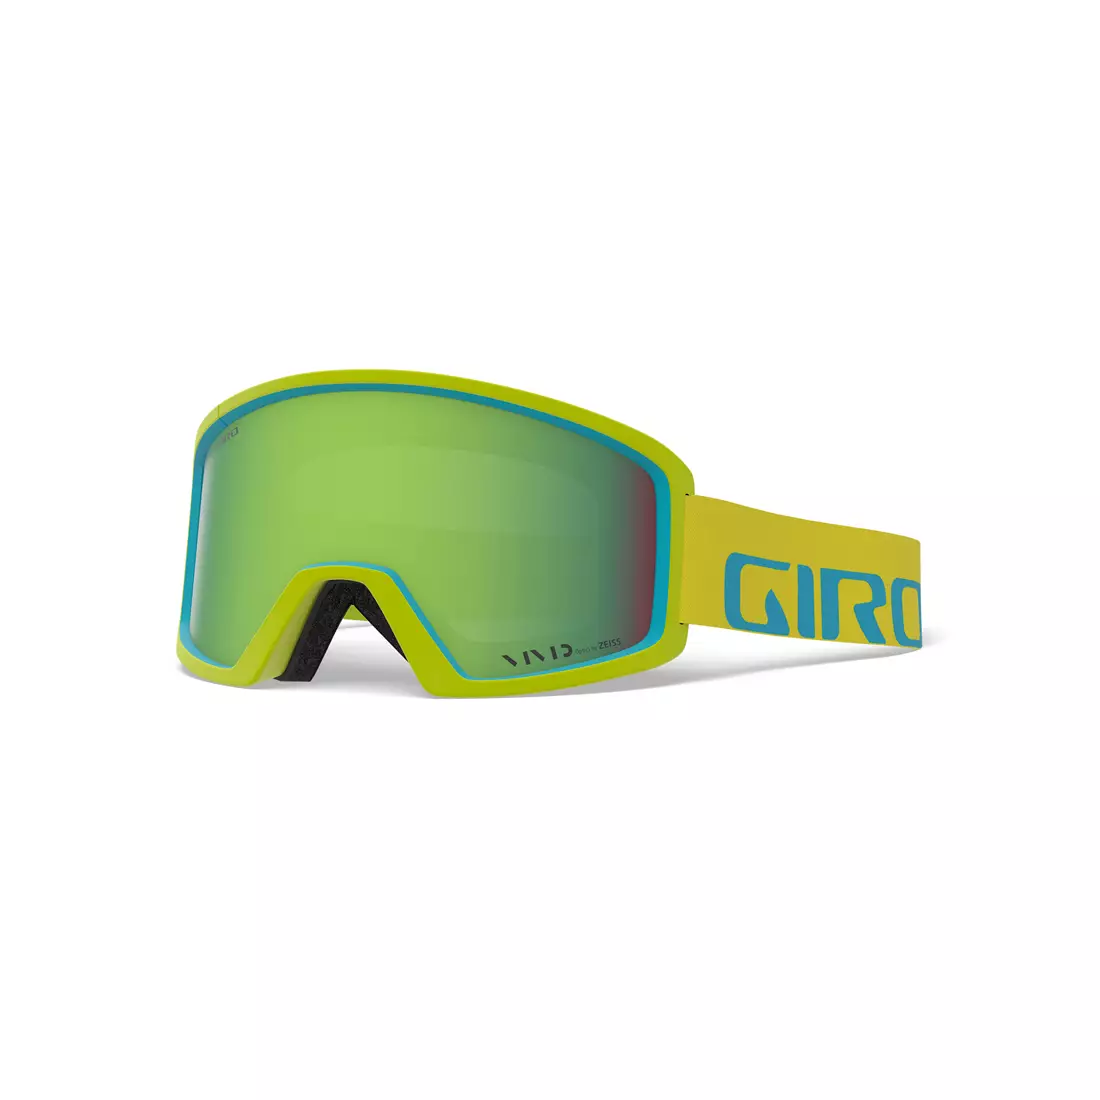 GIRO zimné lyžiarske/snowboardové okuliare BLOK CITRON ICE APX (VIVID EMERALD 22% S2) GR-7105313